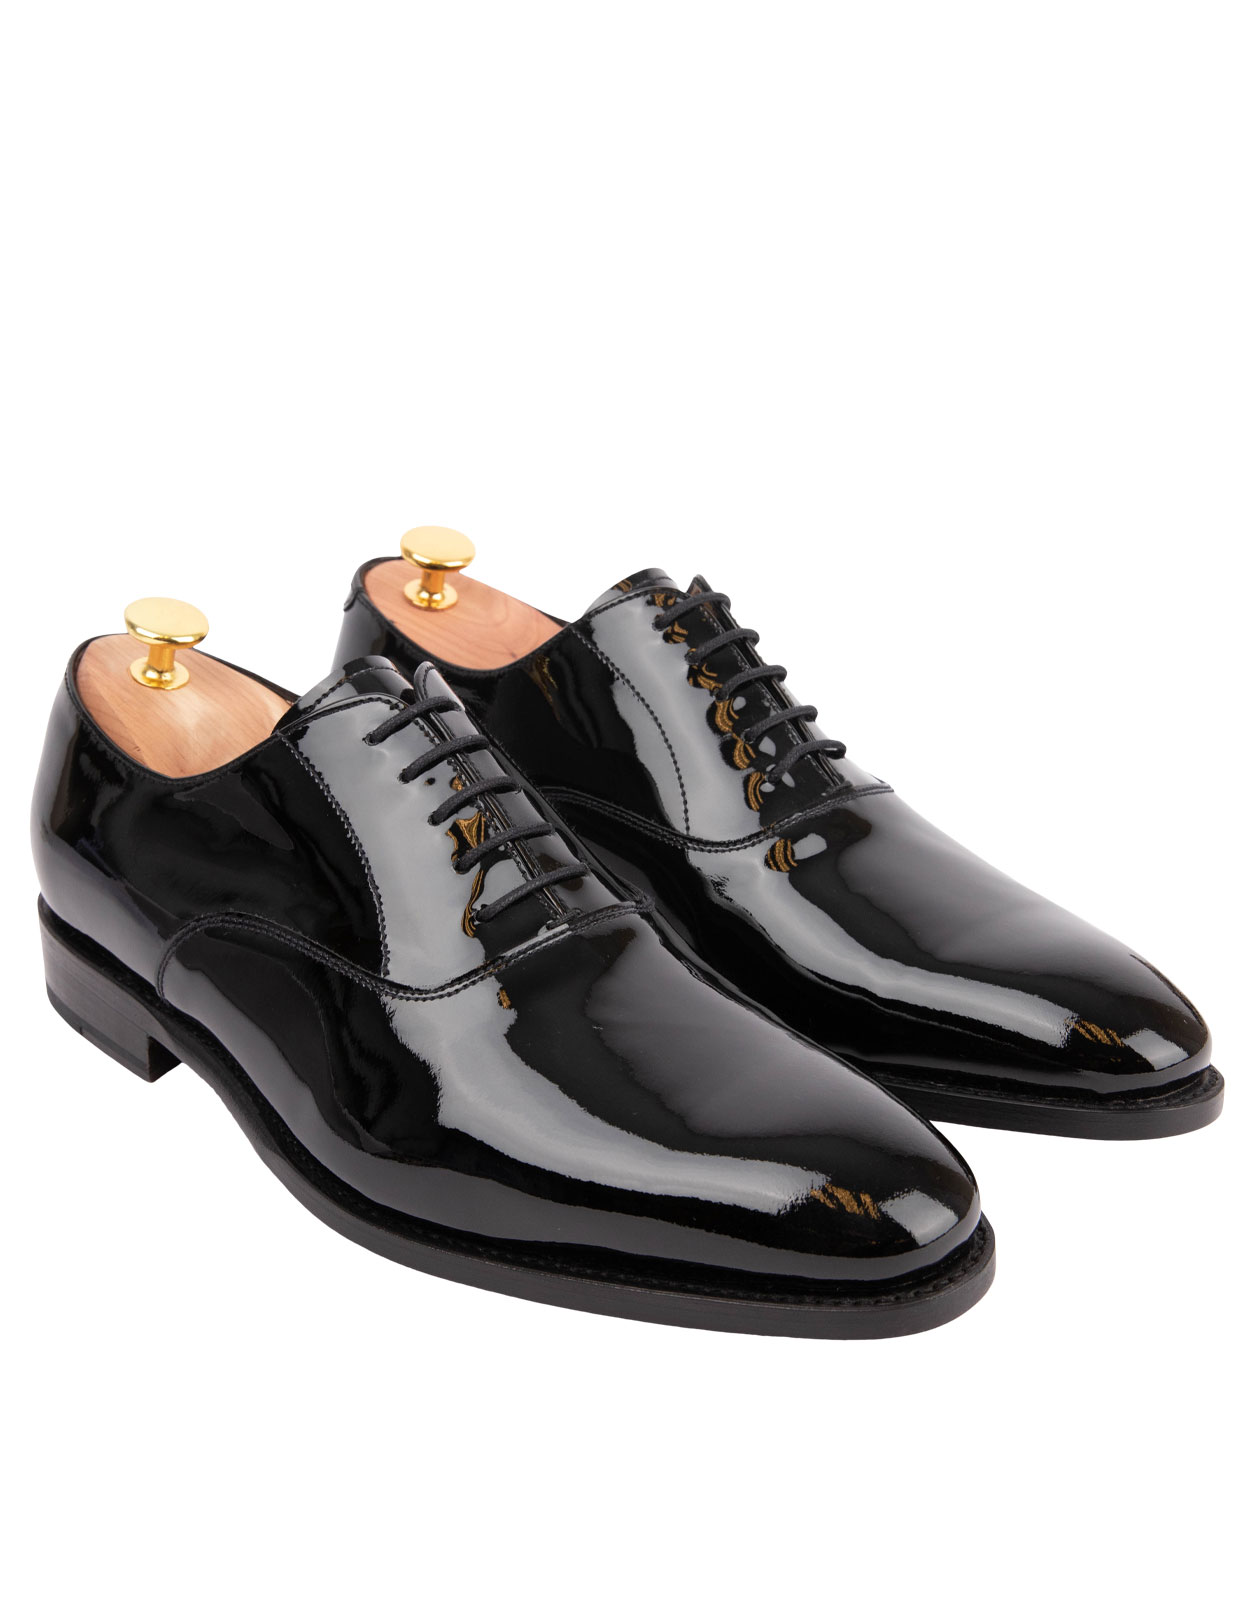 Patent Leather Oxford Shoe Black Stl 6.5